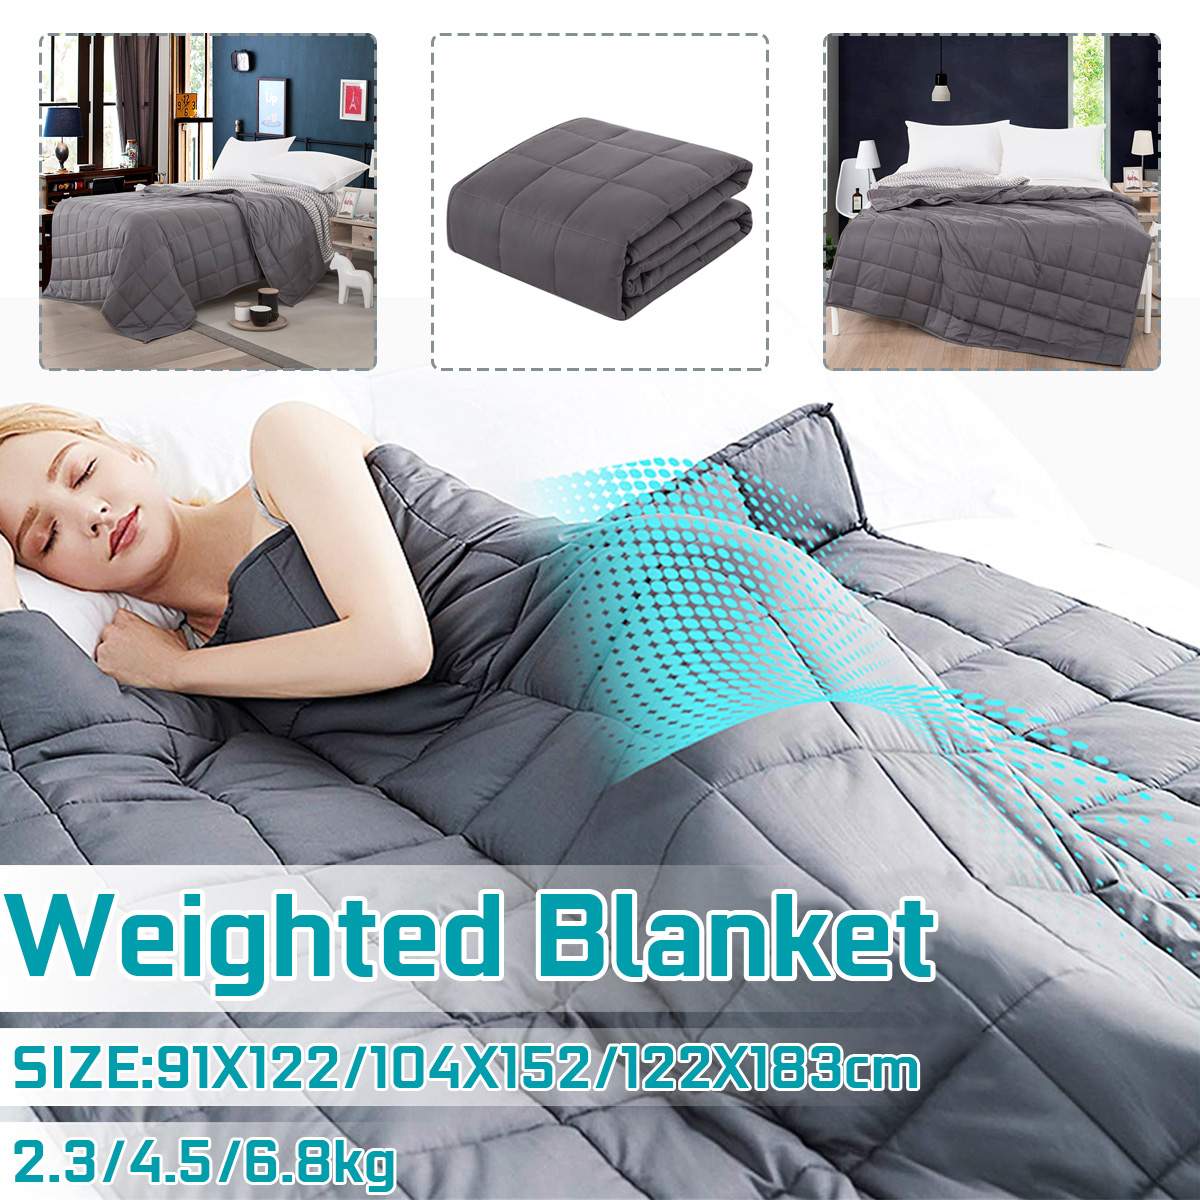 Portable Weighted Blanket For Adult Blankets Decompression Sleep Aid Pressure Sleeping Heavy Winter Blanket Dark Grey Cotton